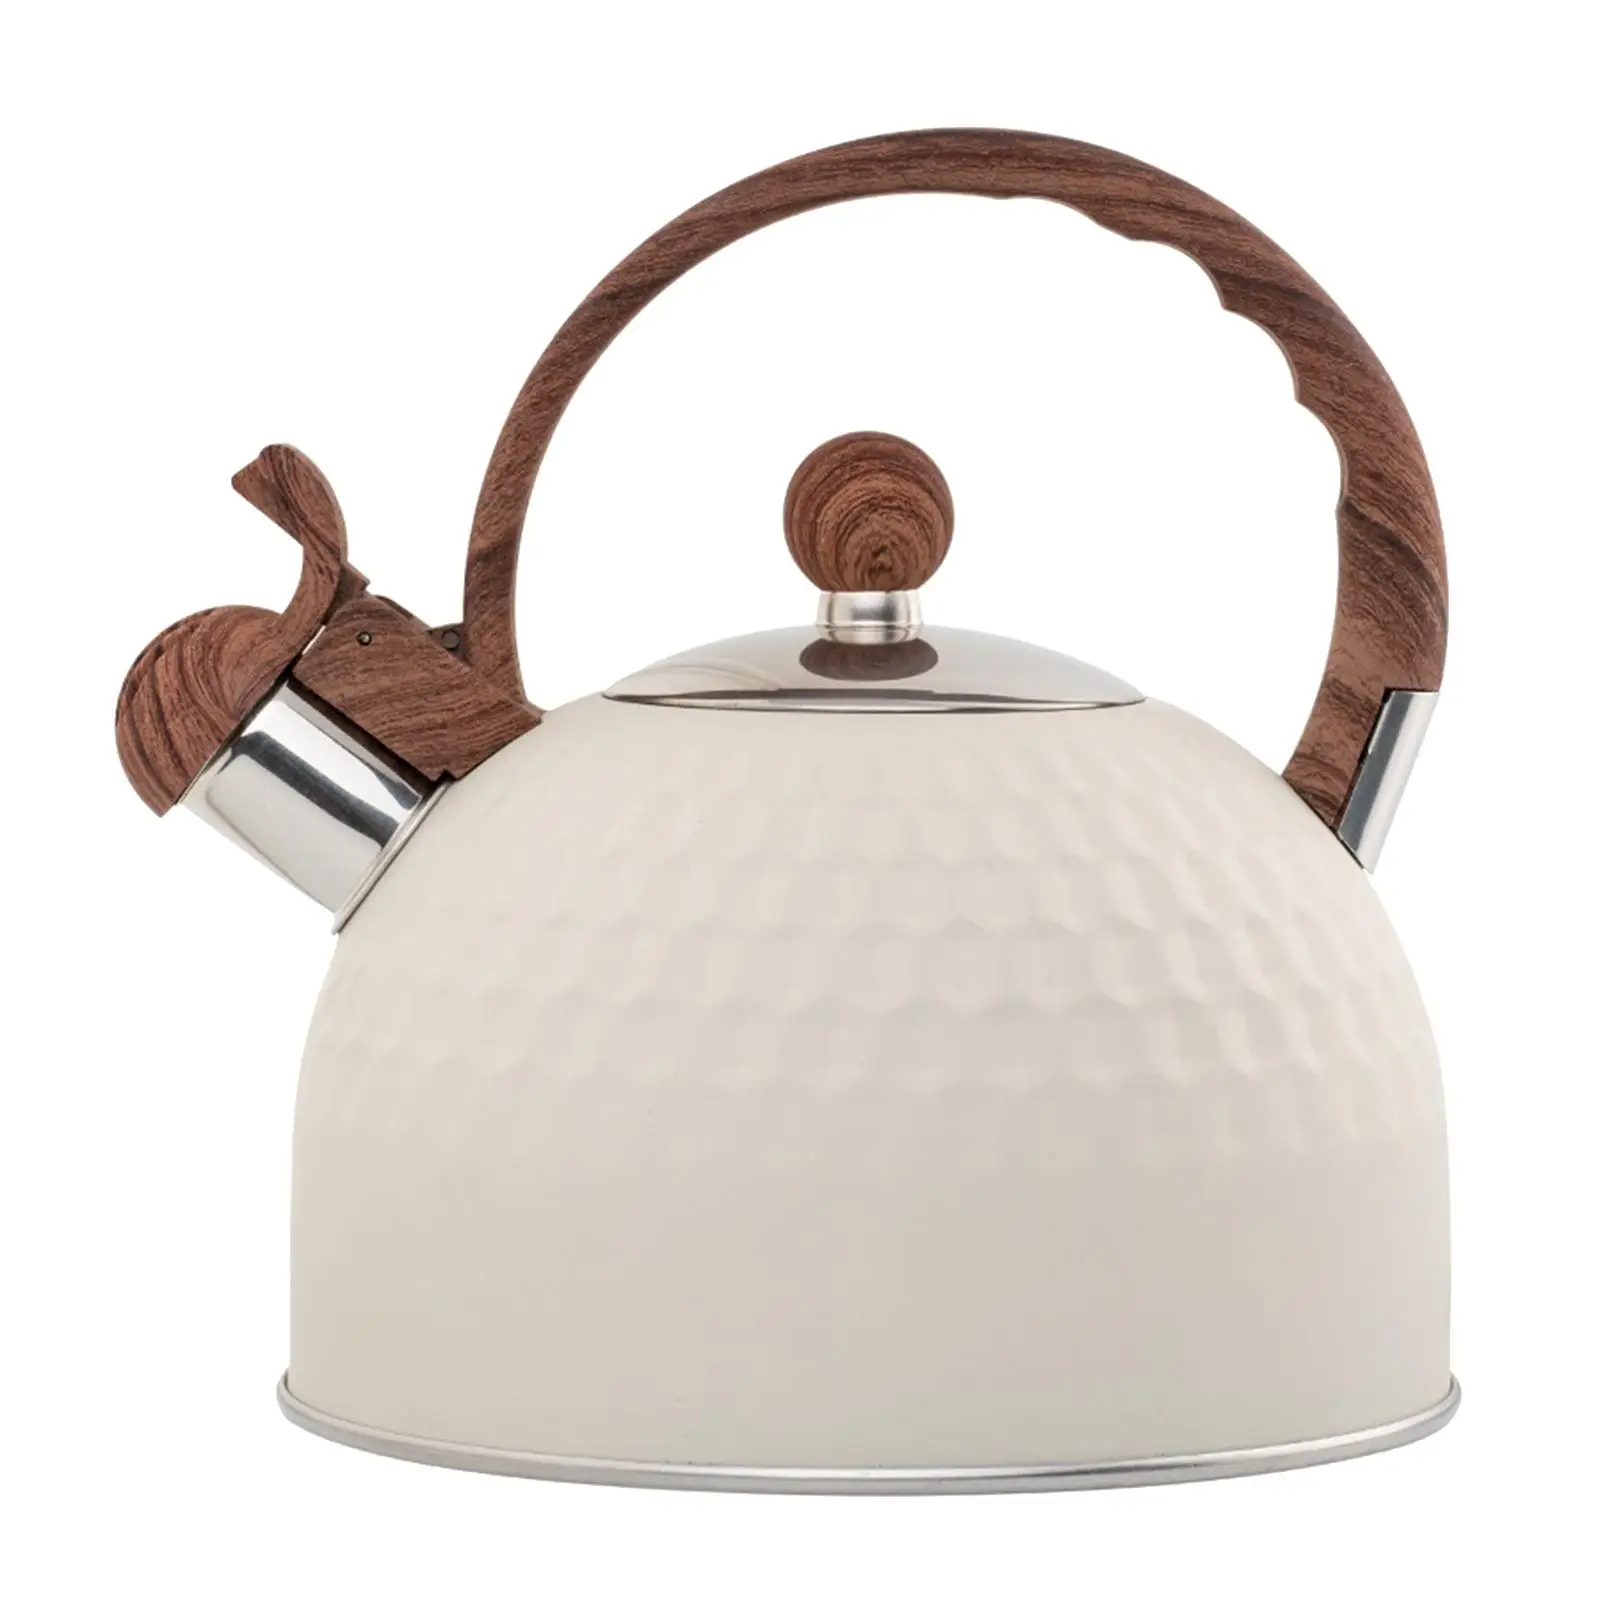 Portable Whistling Tea Kettle, Stainless Steel Loud Whistle Heat-Proof 2.5 Qt Enamel Teapot for Drinking Stovetops Family Cook